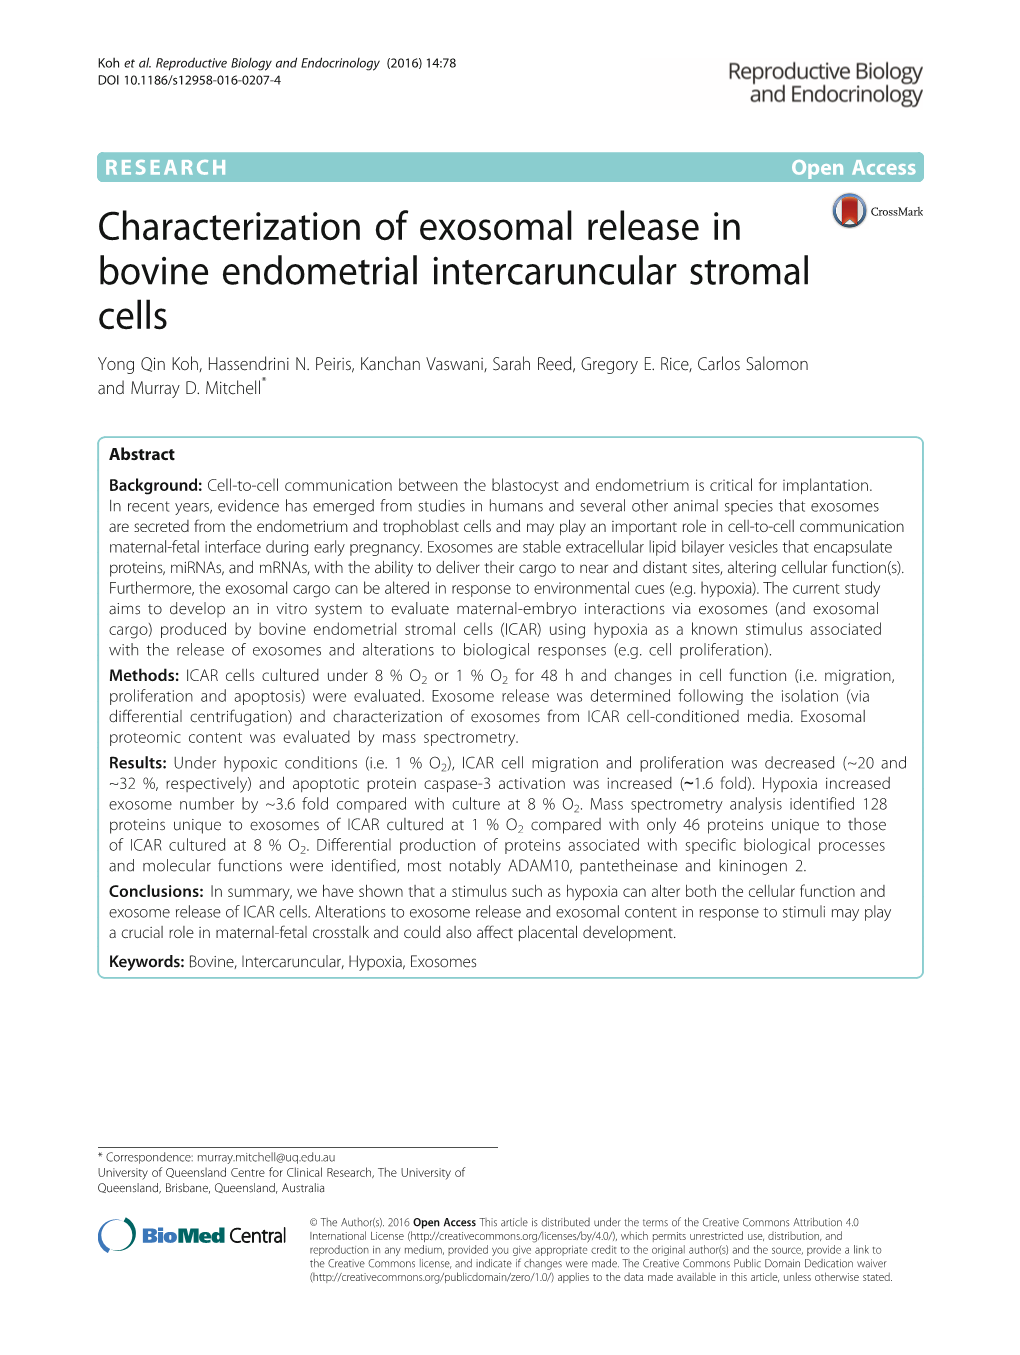 Characterization of Exosomal Release in Bovine Endometrial Intercaruncular Stromal Cells Yong Qin Koh, Hassendrini N